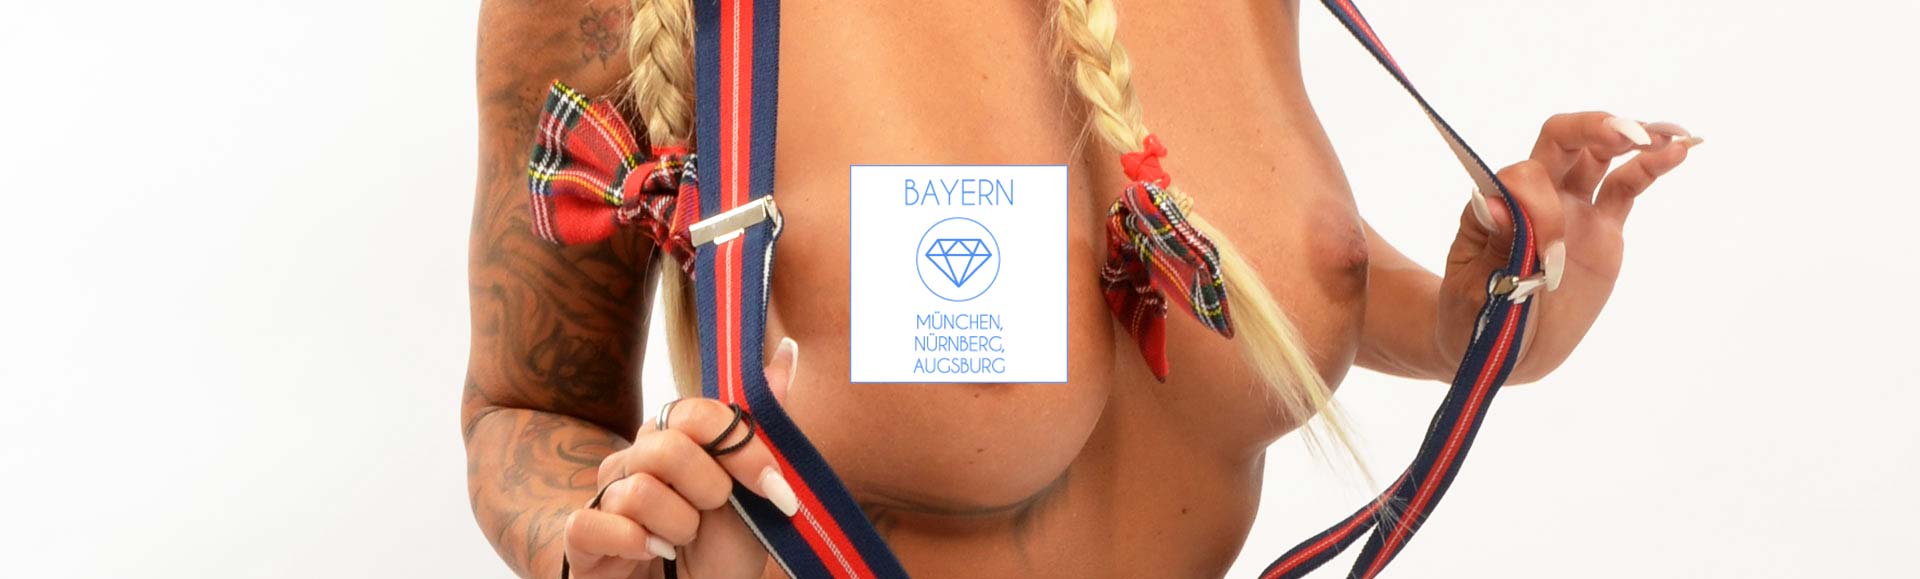 Caprice Escort - Bayern